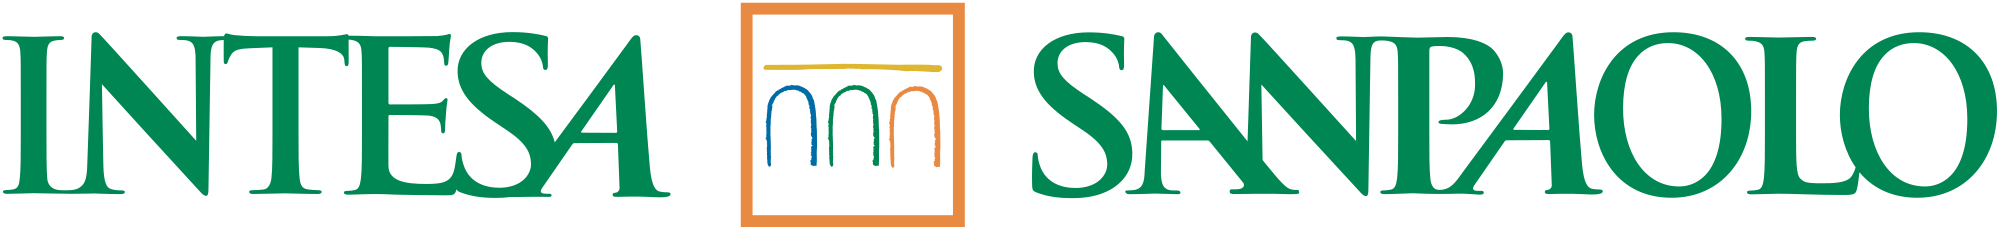 Intesa Sanpaolo Brand Logo